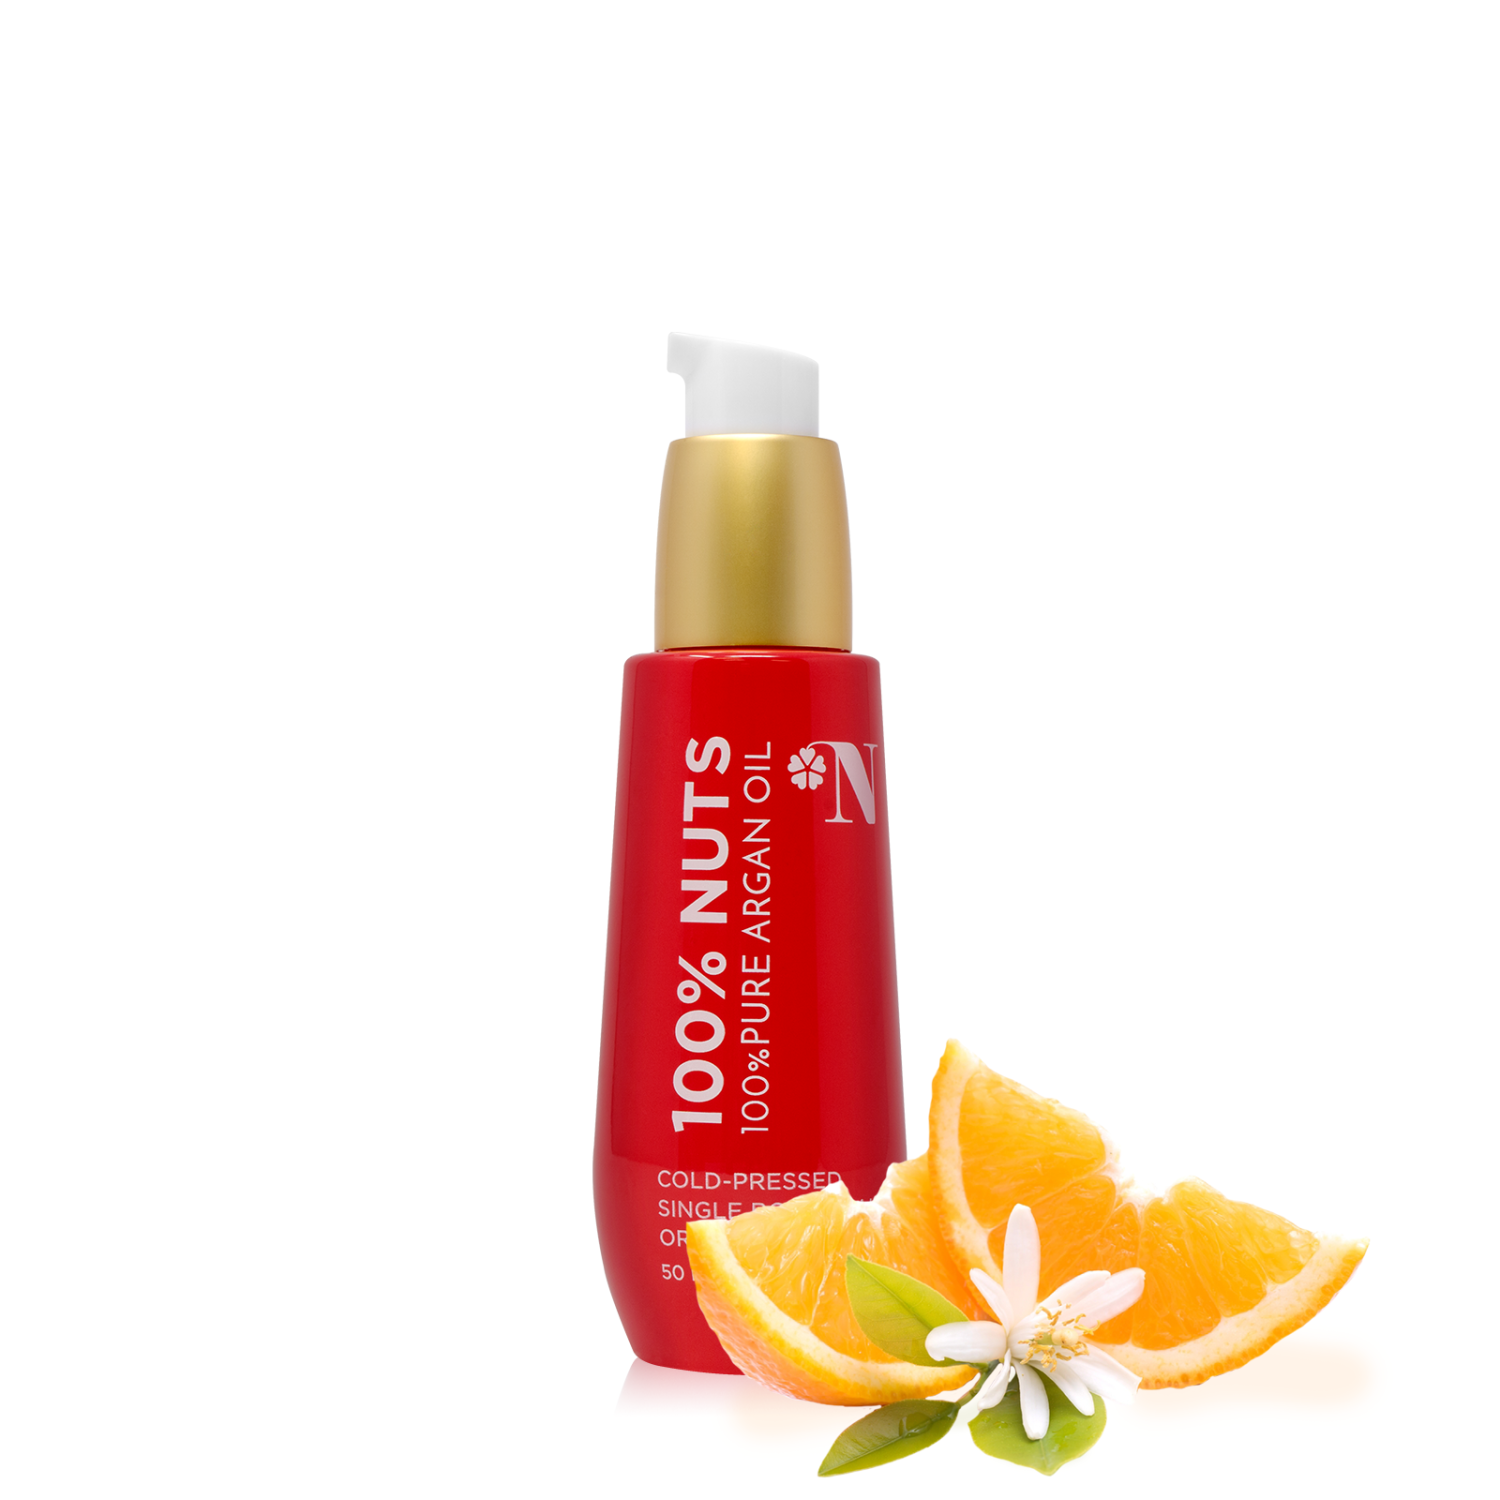 Beauty Nut 100% Pure USDA Certified Organic Scented Argan Oil, Orange Blossom, 50ml | 1.7oz